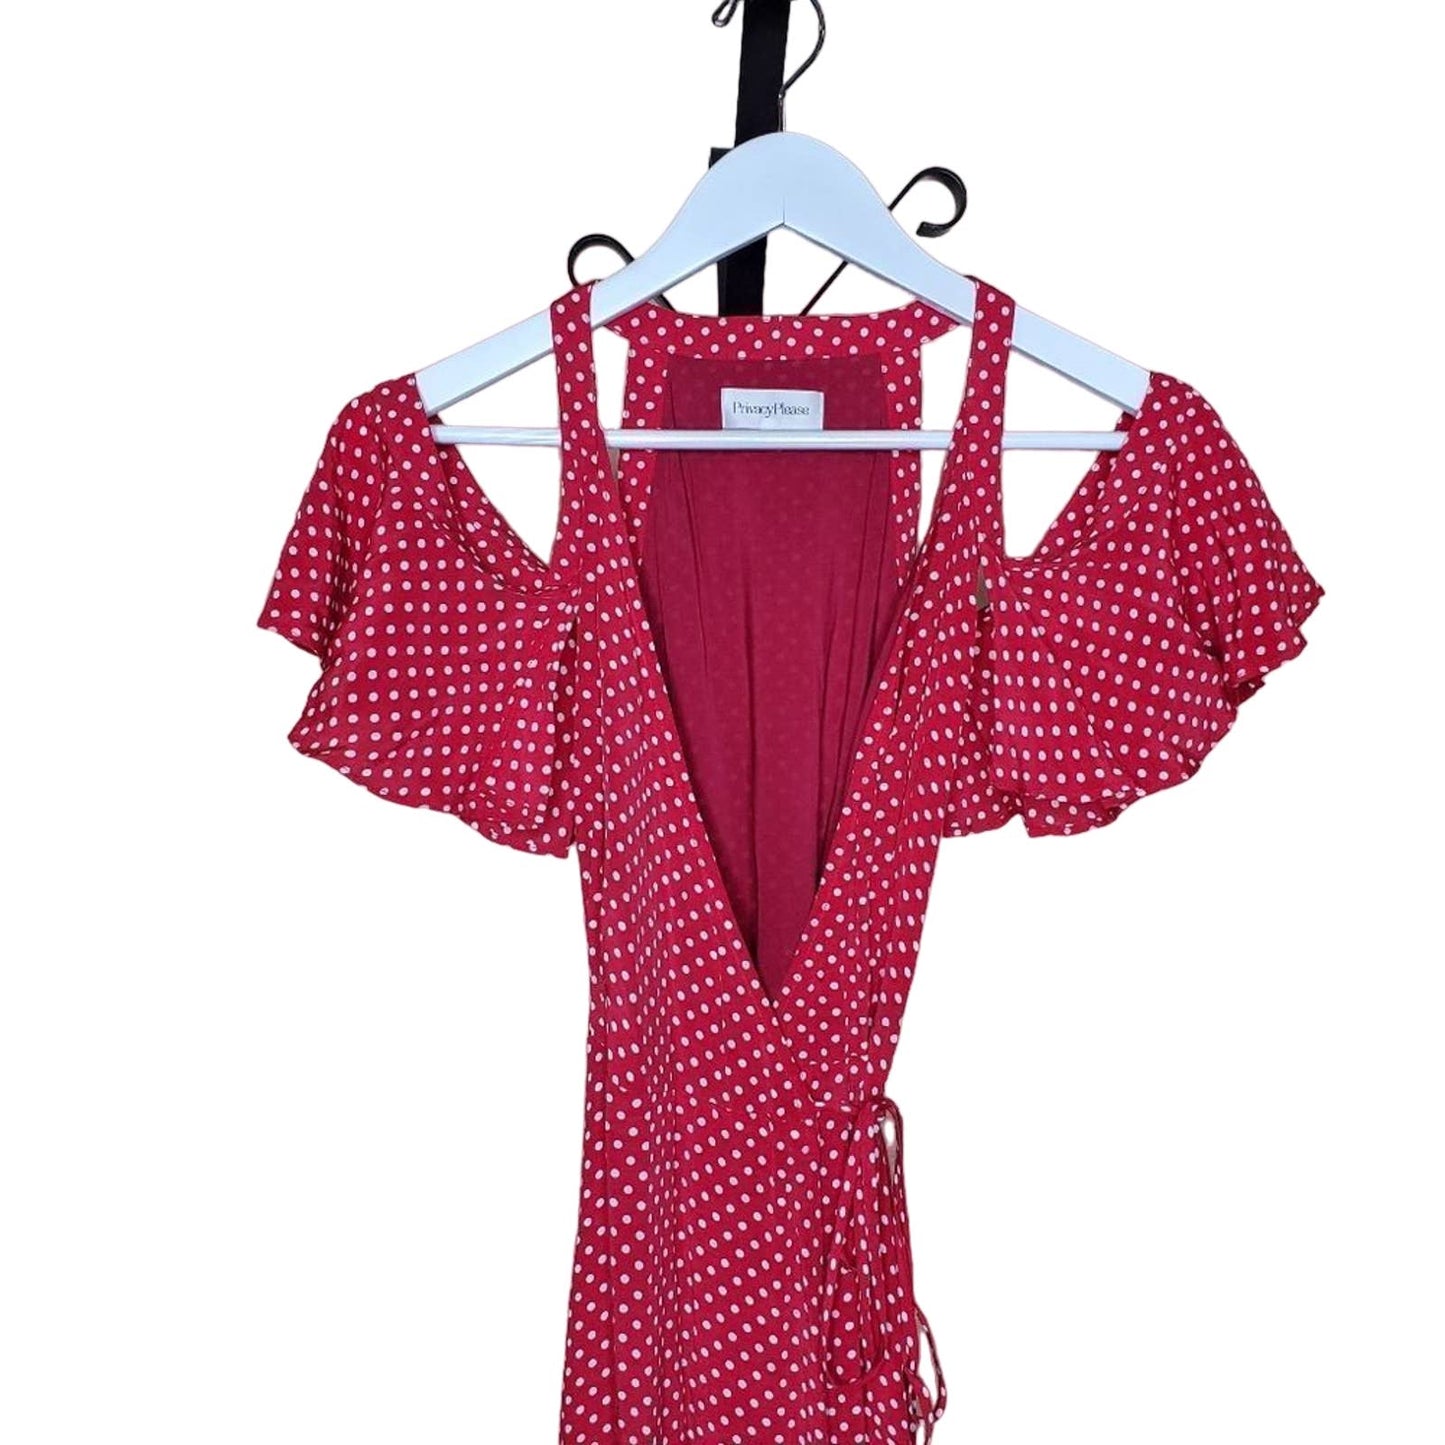 Privacy Please Red & White Polka Dot Wrap Maxi Dress, Size X-Small